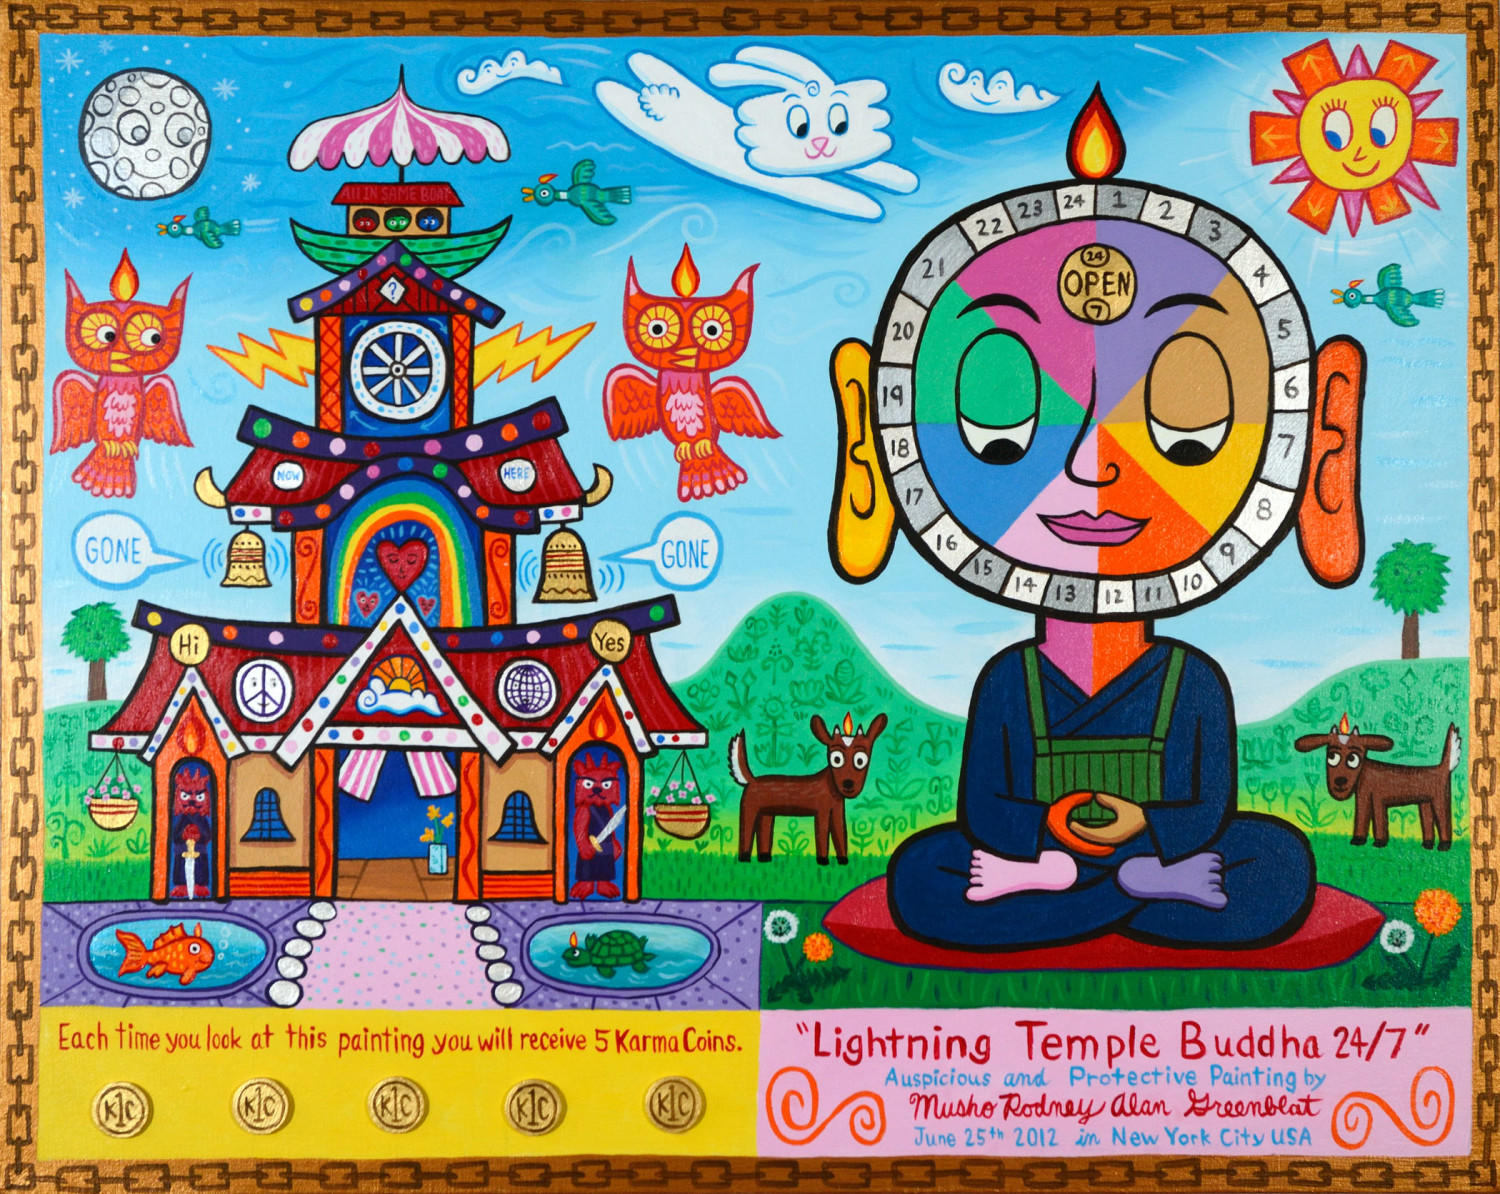 Lightning Temple Buddha 24/7